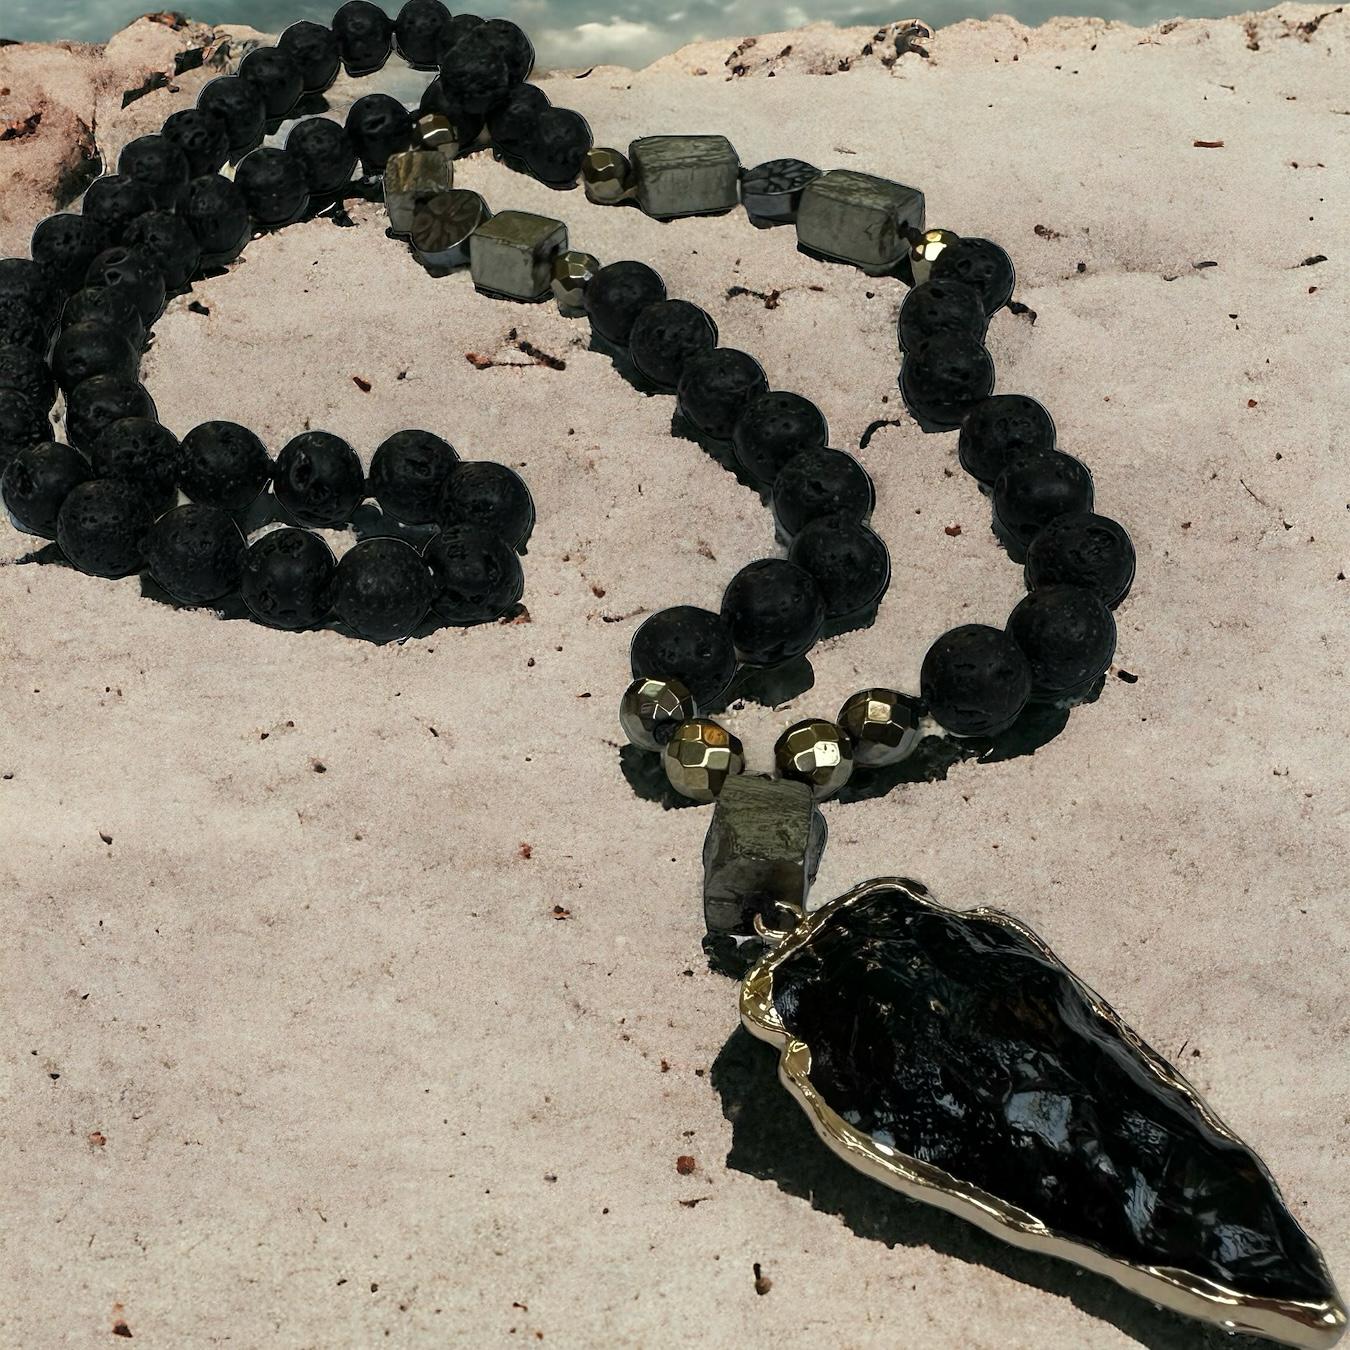 Black Obsidian Arrowhead Pendant Mala Necklace